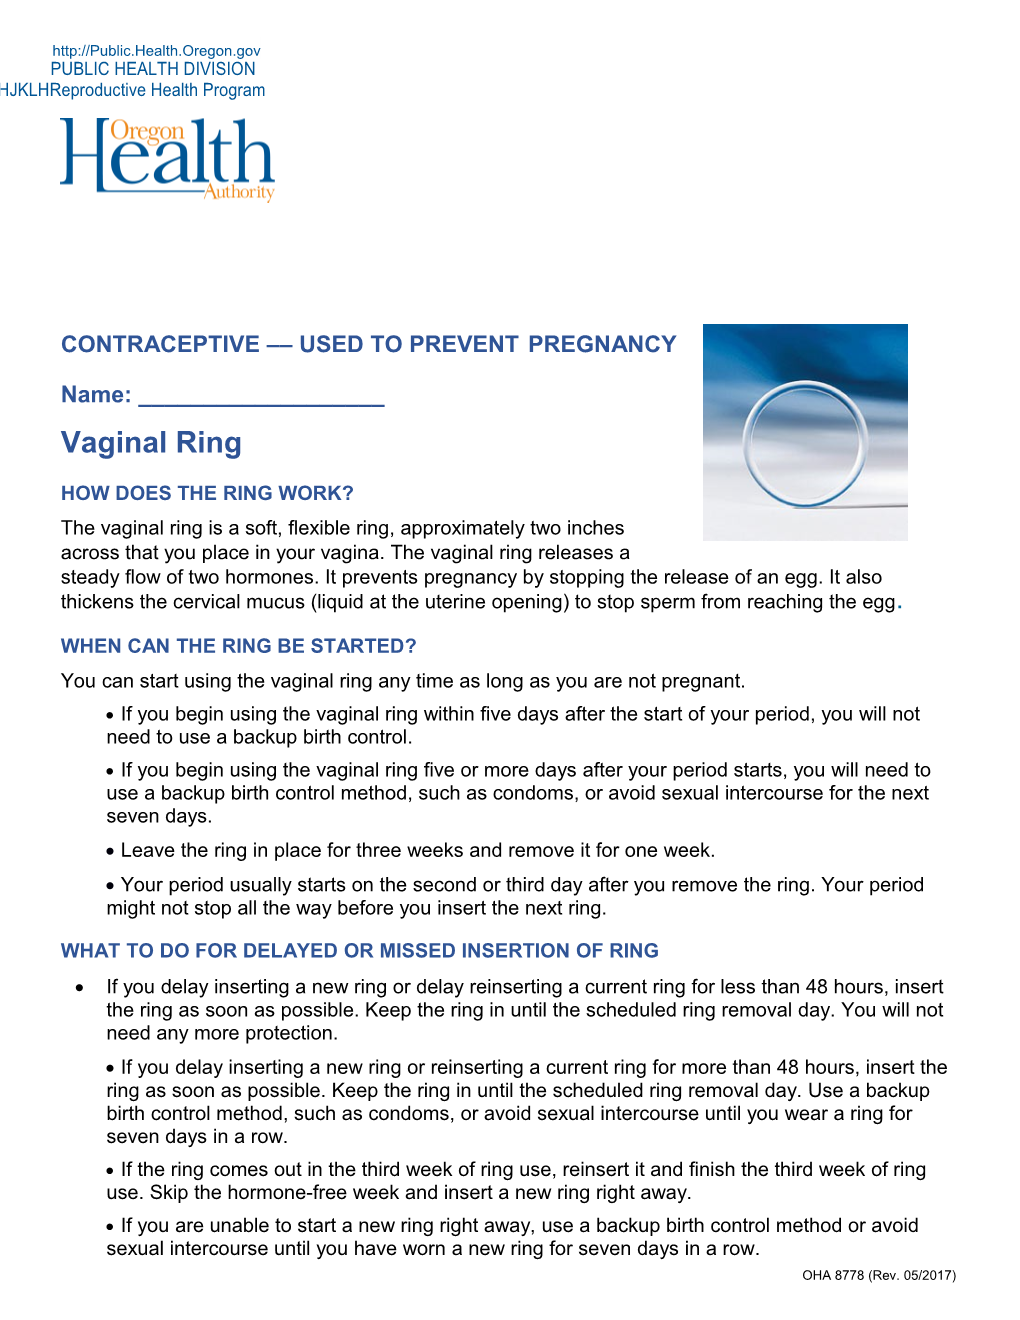 Ring Medication Information Sheet